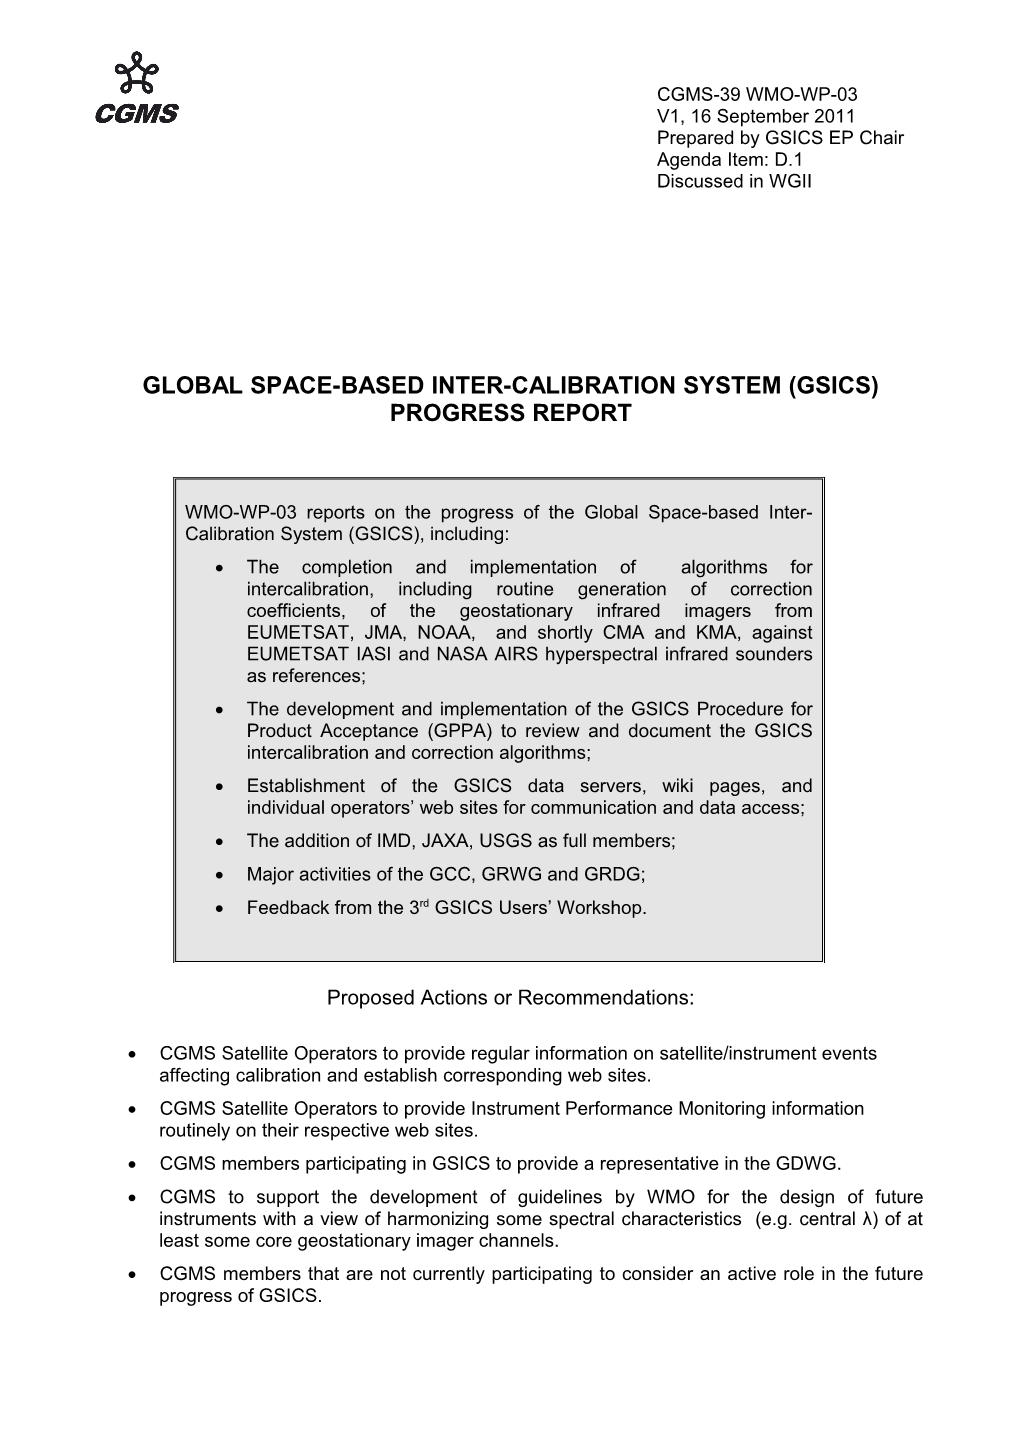 Global Space-Based Inter-Calibration System (Gsics) Progress Report